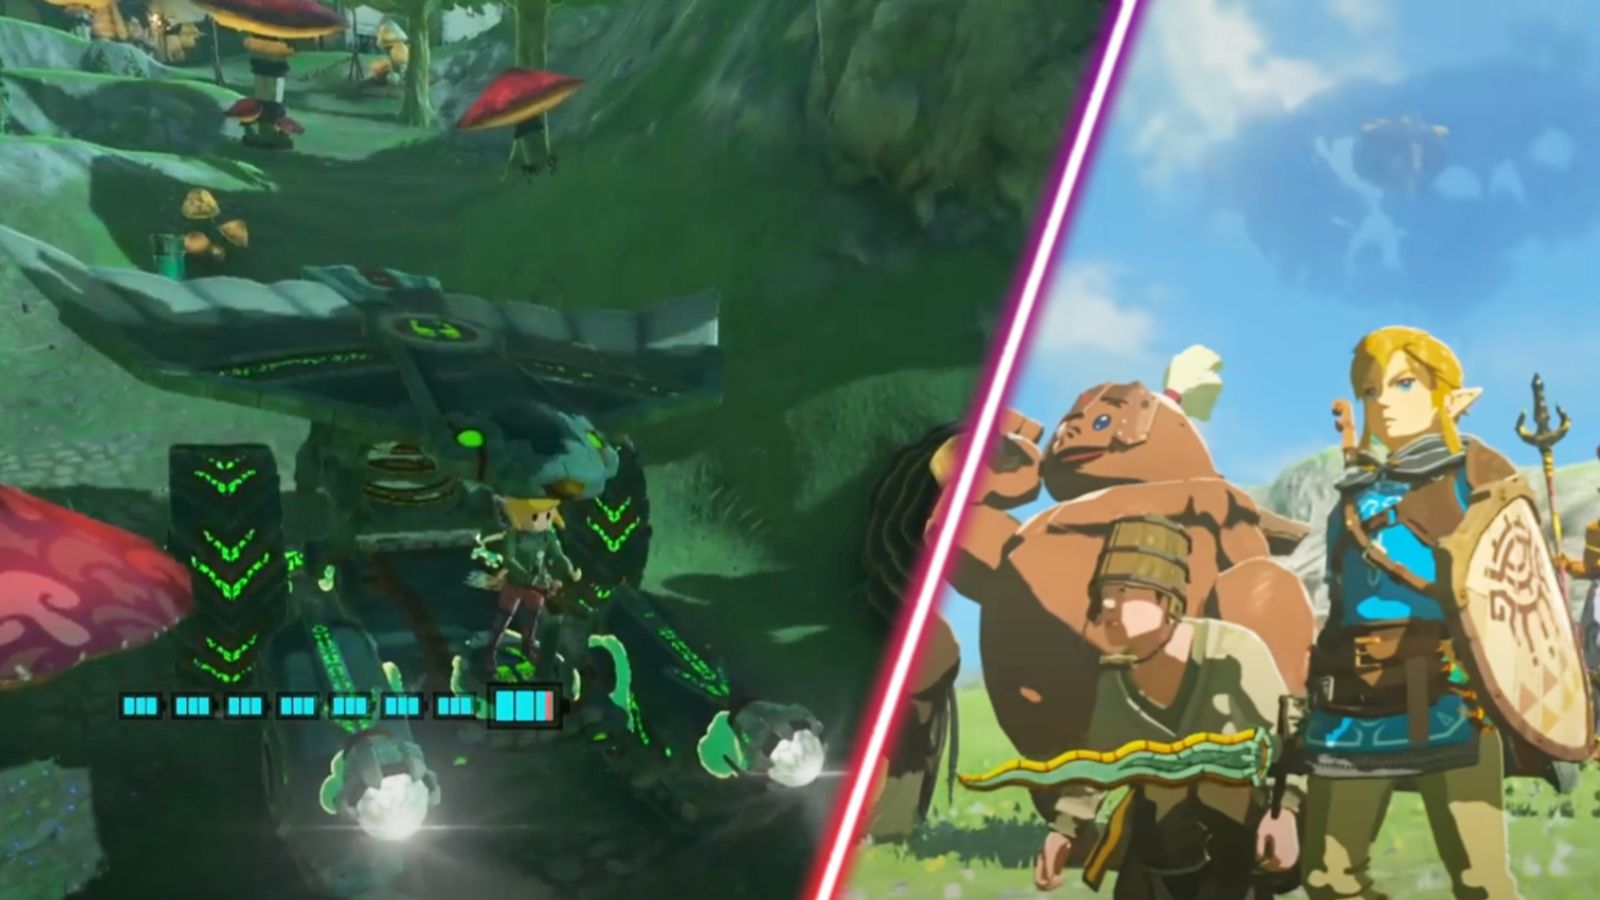 Link racing a vehicle in Zelda Tears of the Kingdom.